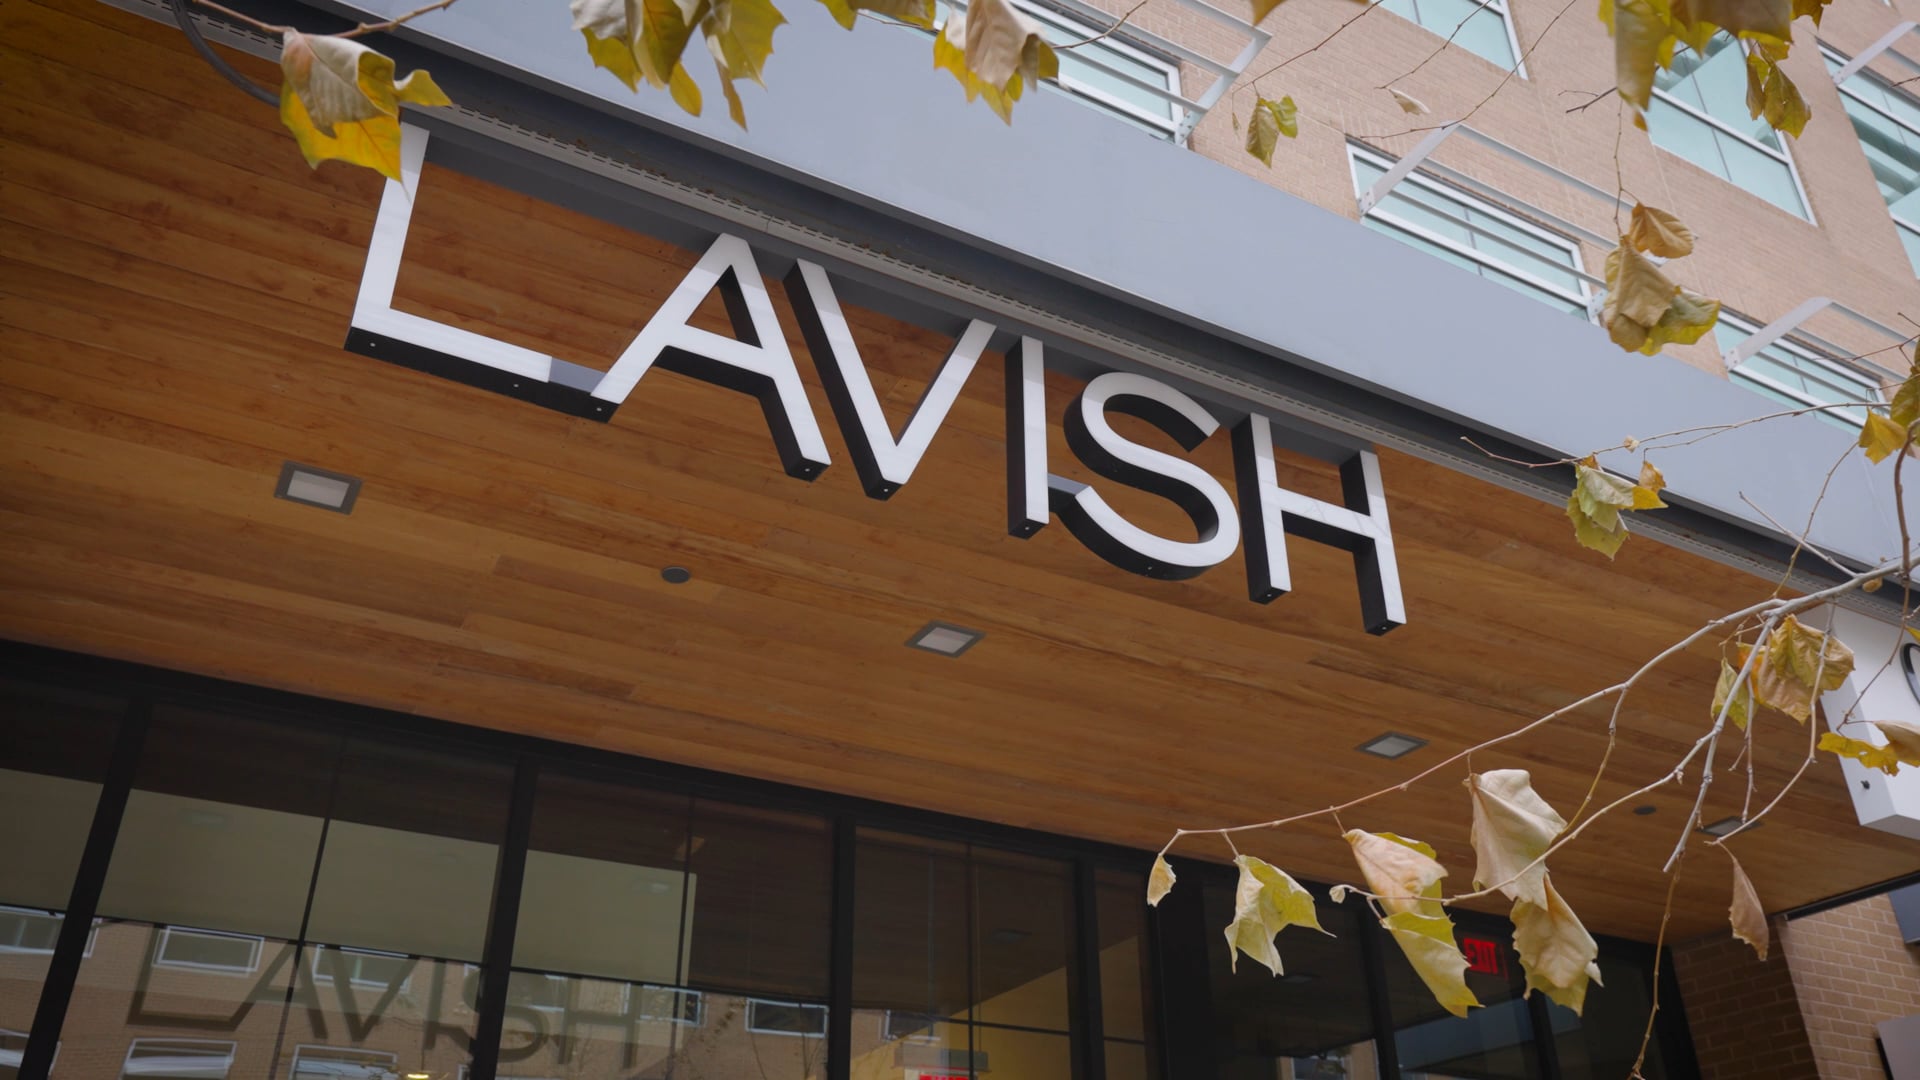 LAVISH kitchen + bath Promo